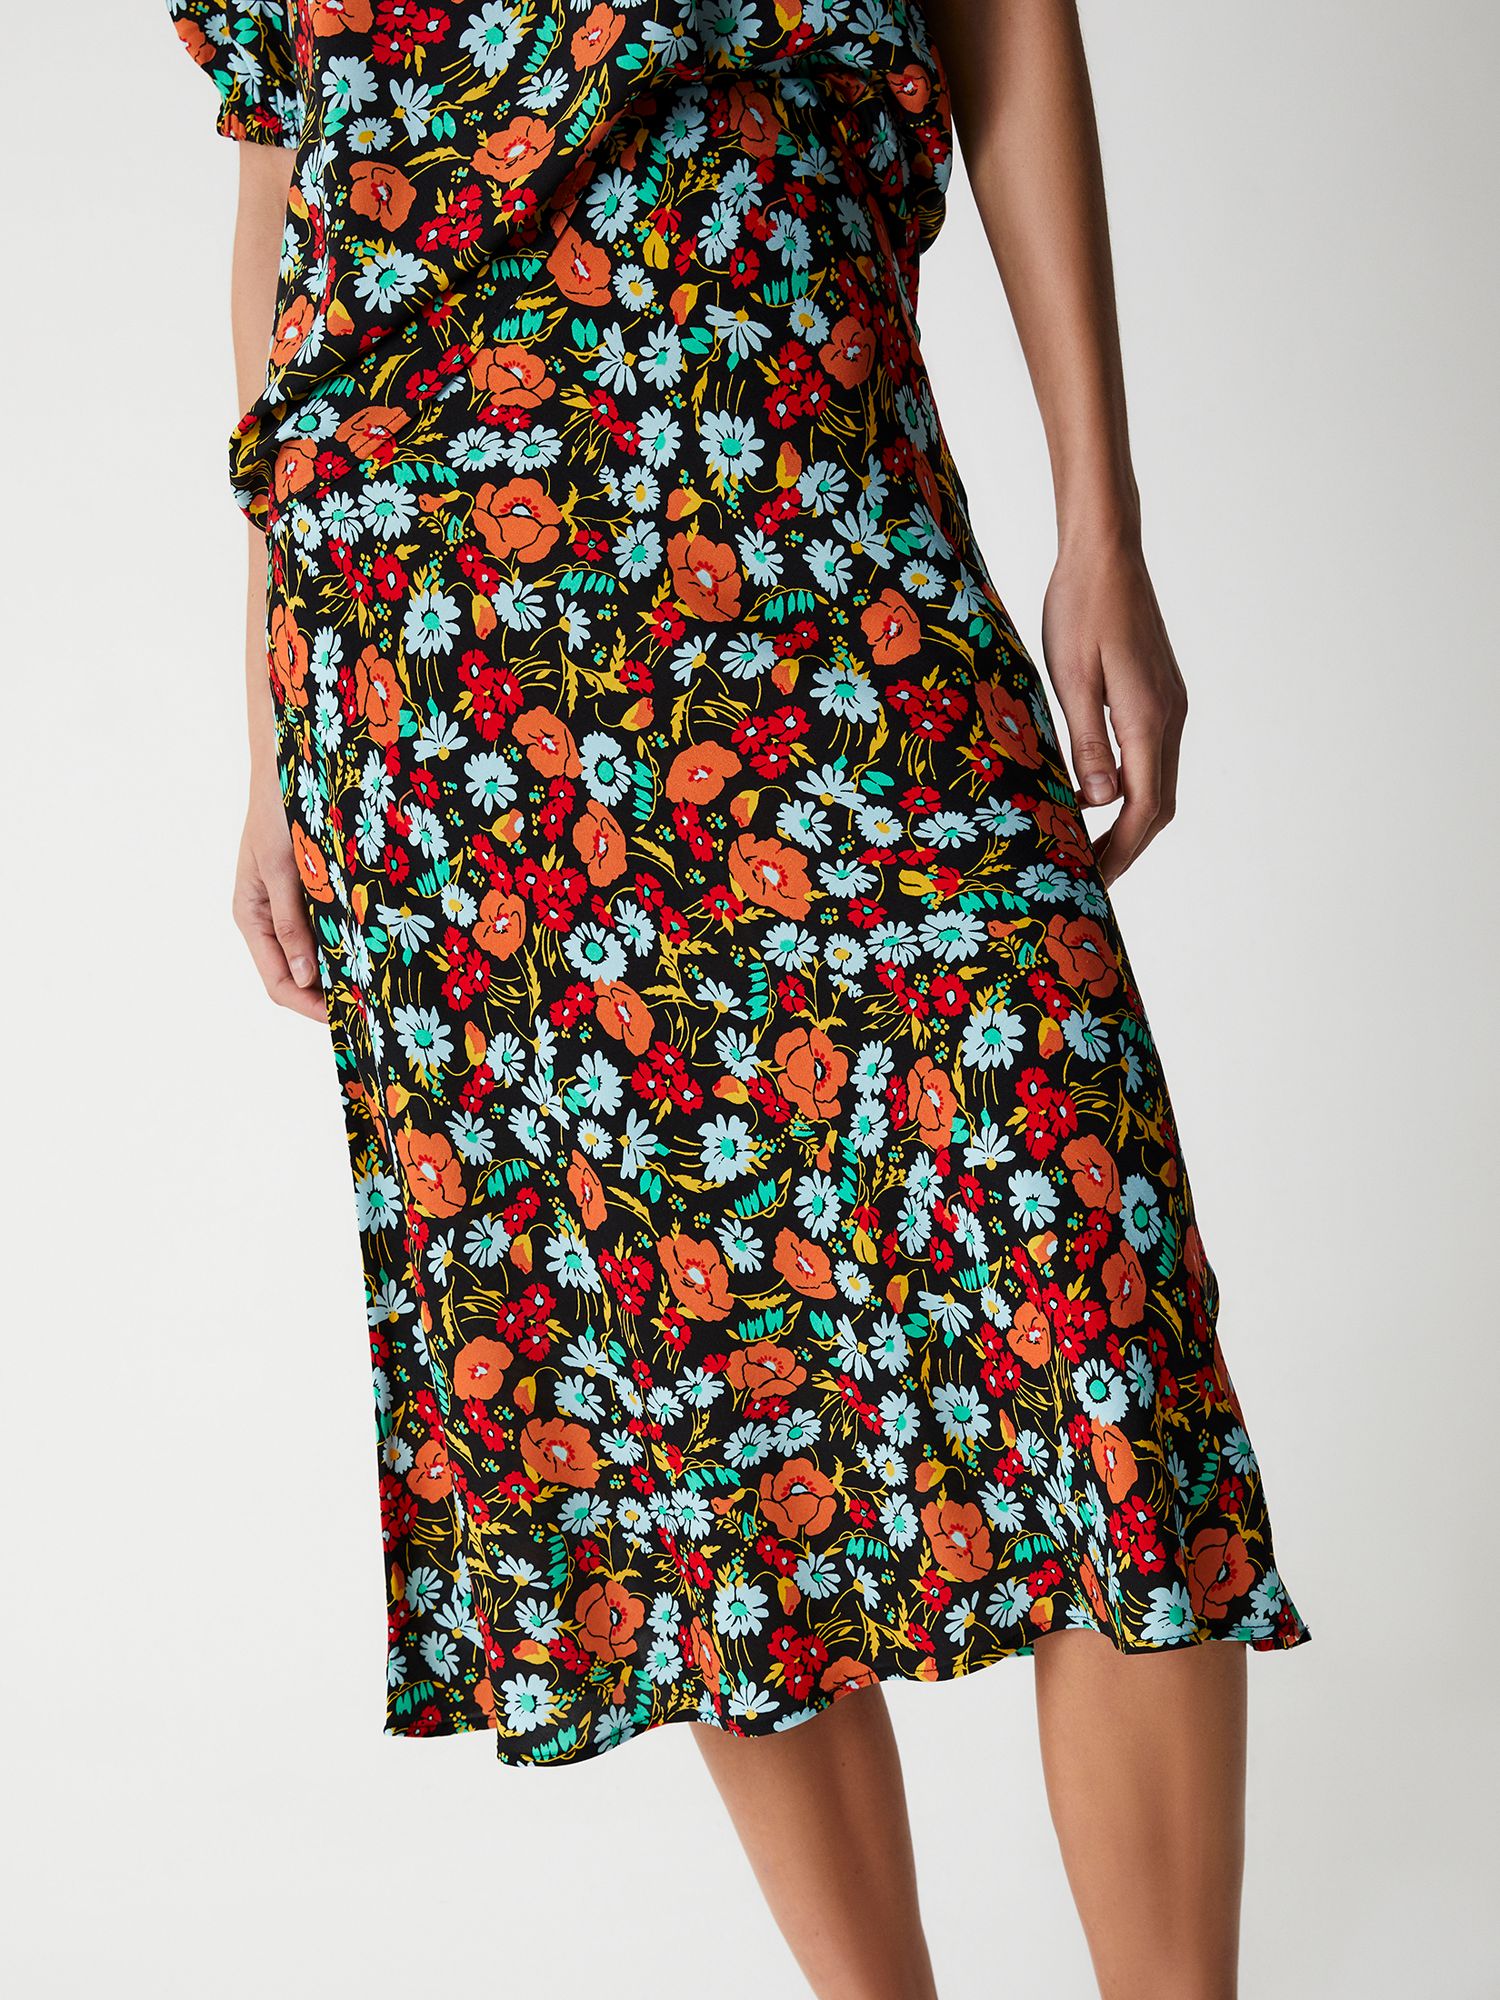 Finery Evelyn Classic Floral Print Midi Skirt, Black/Multi